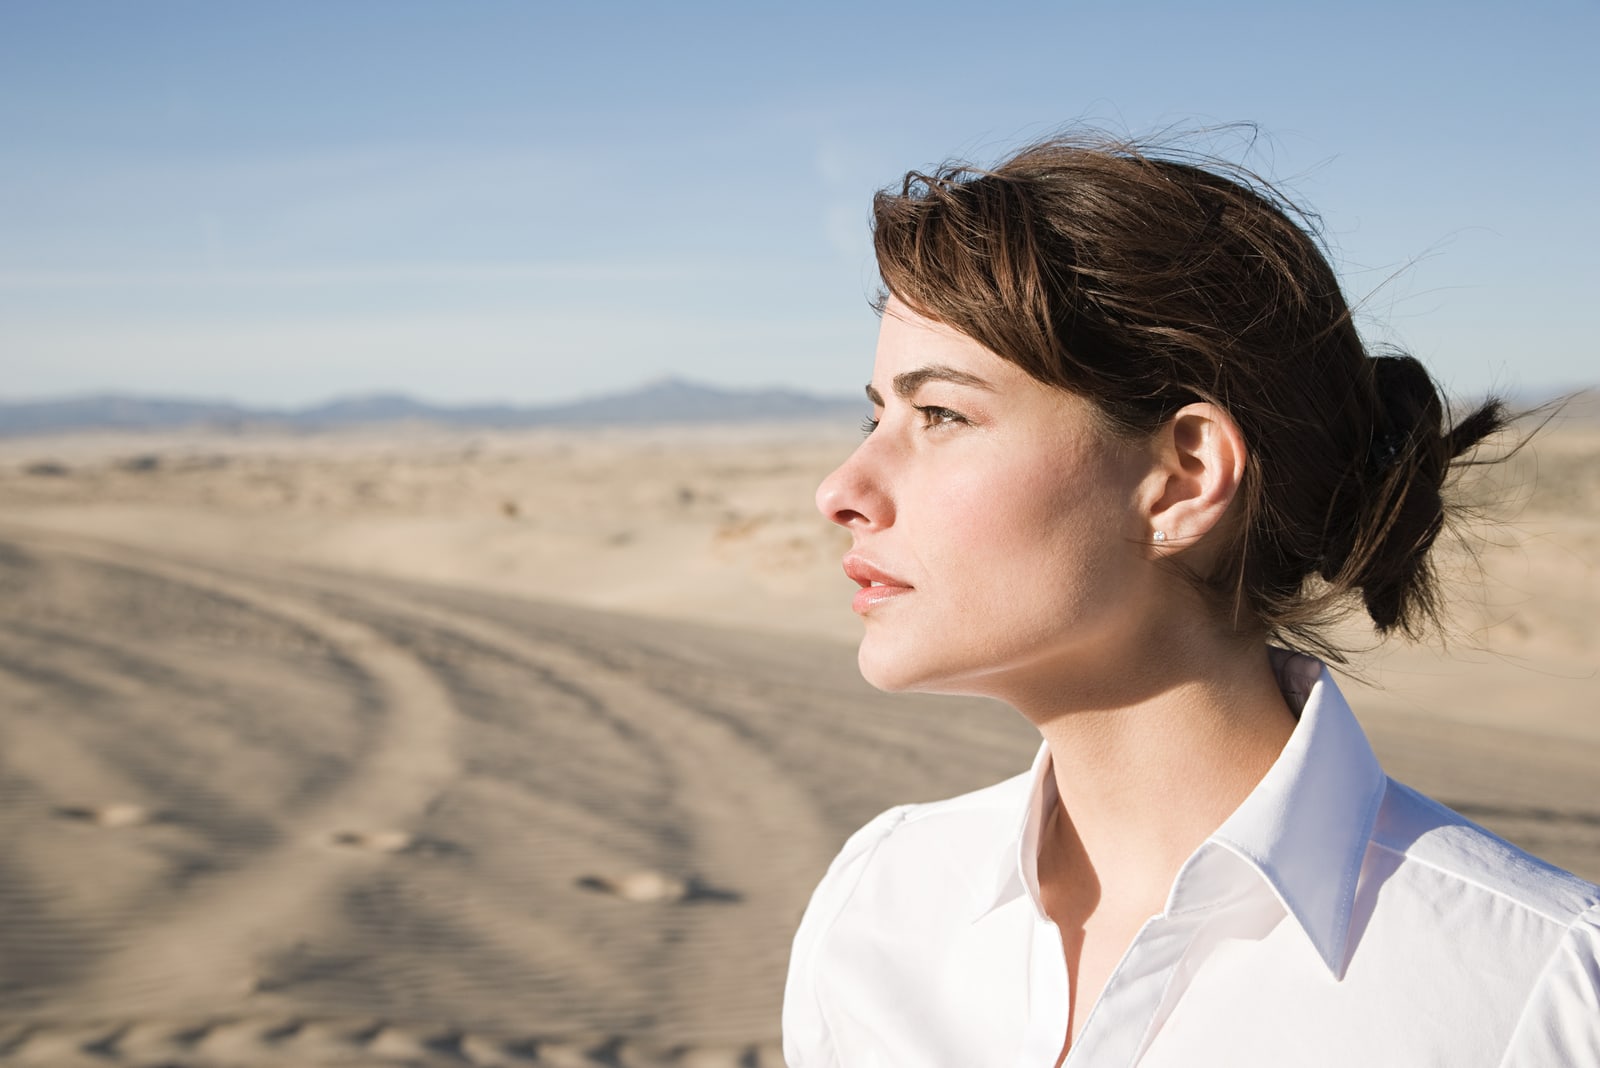 woman standing in desert alone